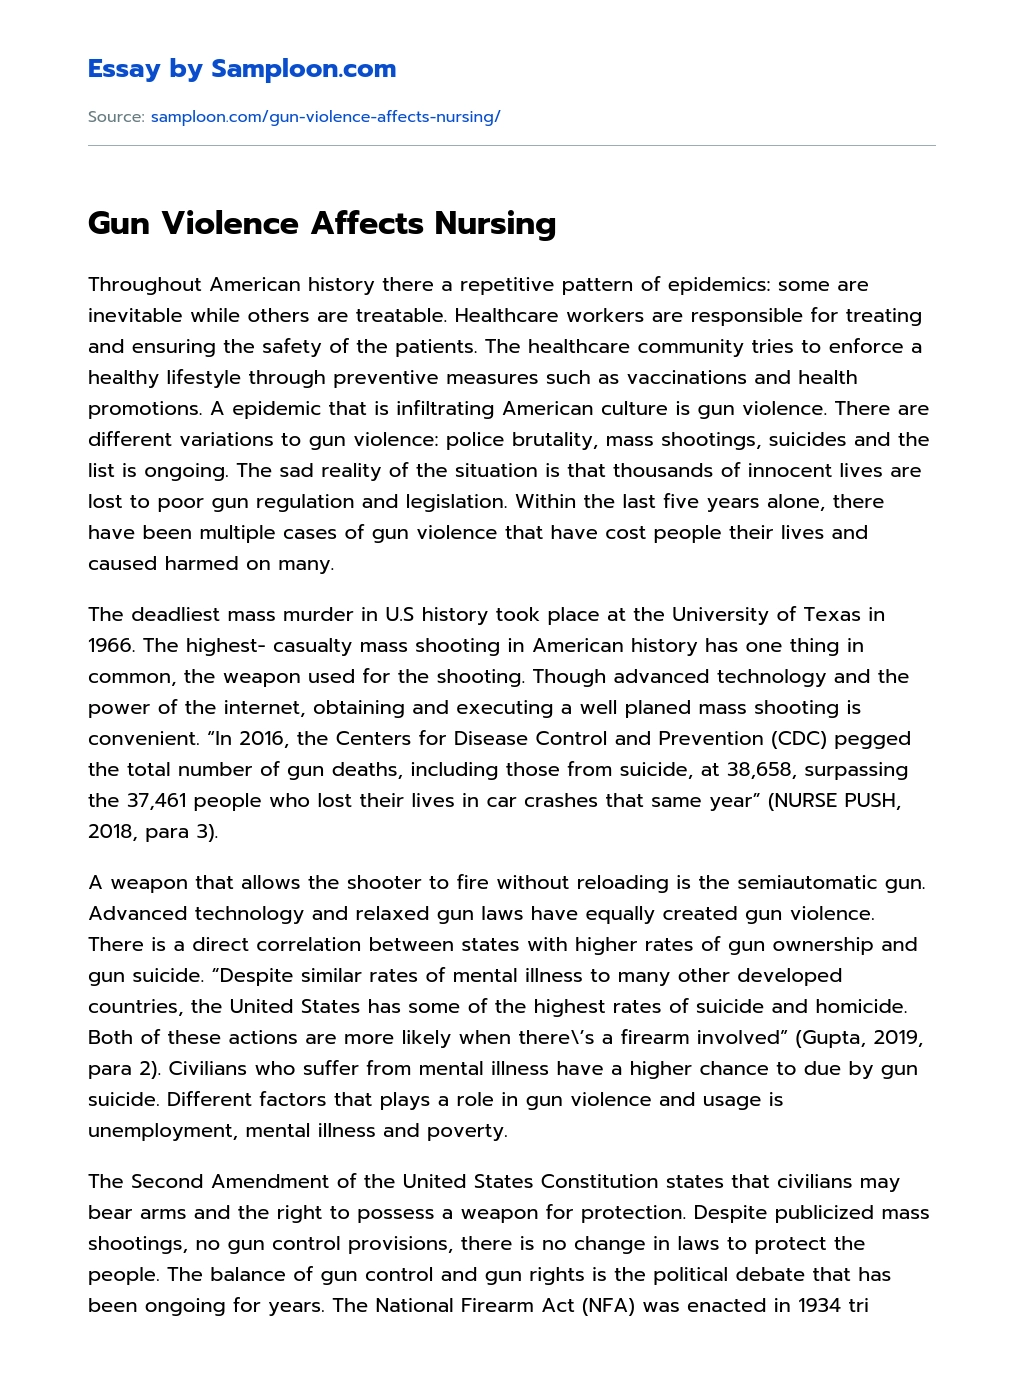 Gun Violence Affects Nursing essay